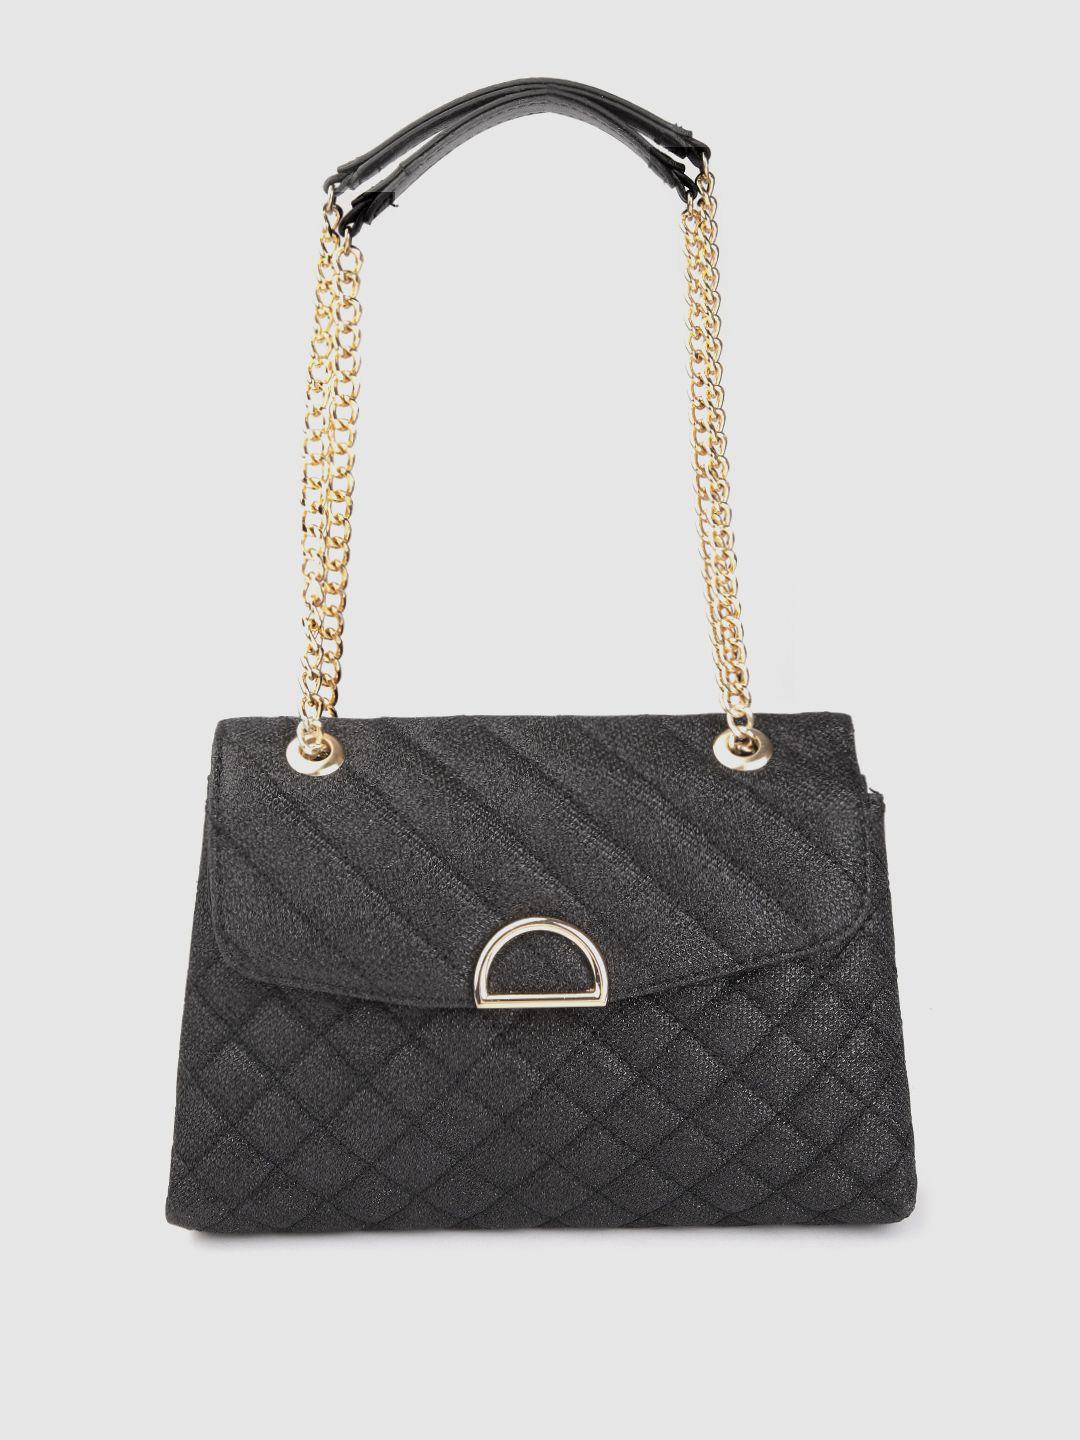 accessorize women black shimmery quilted shoulder bag